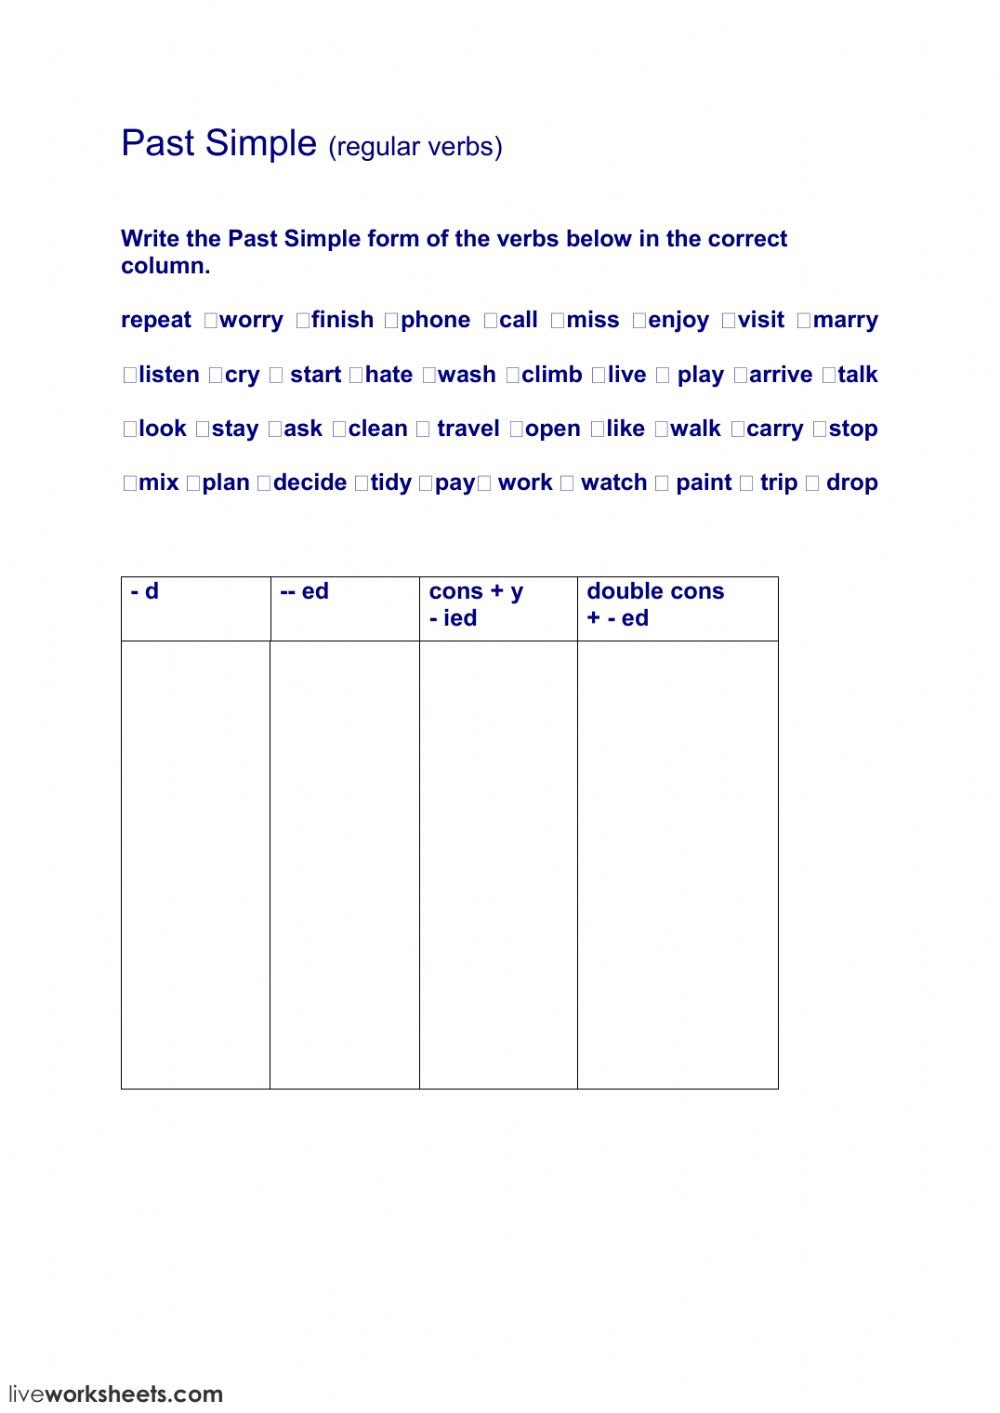 Regular Verbs Past Simple Worksheet Together With Y To Ied Worksheets